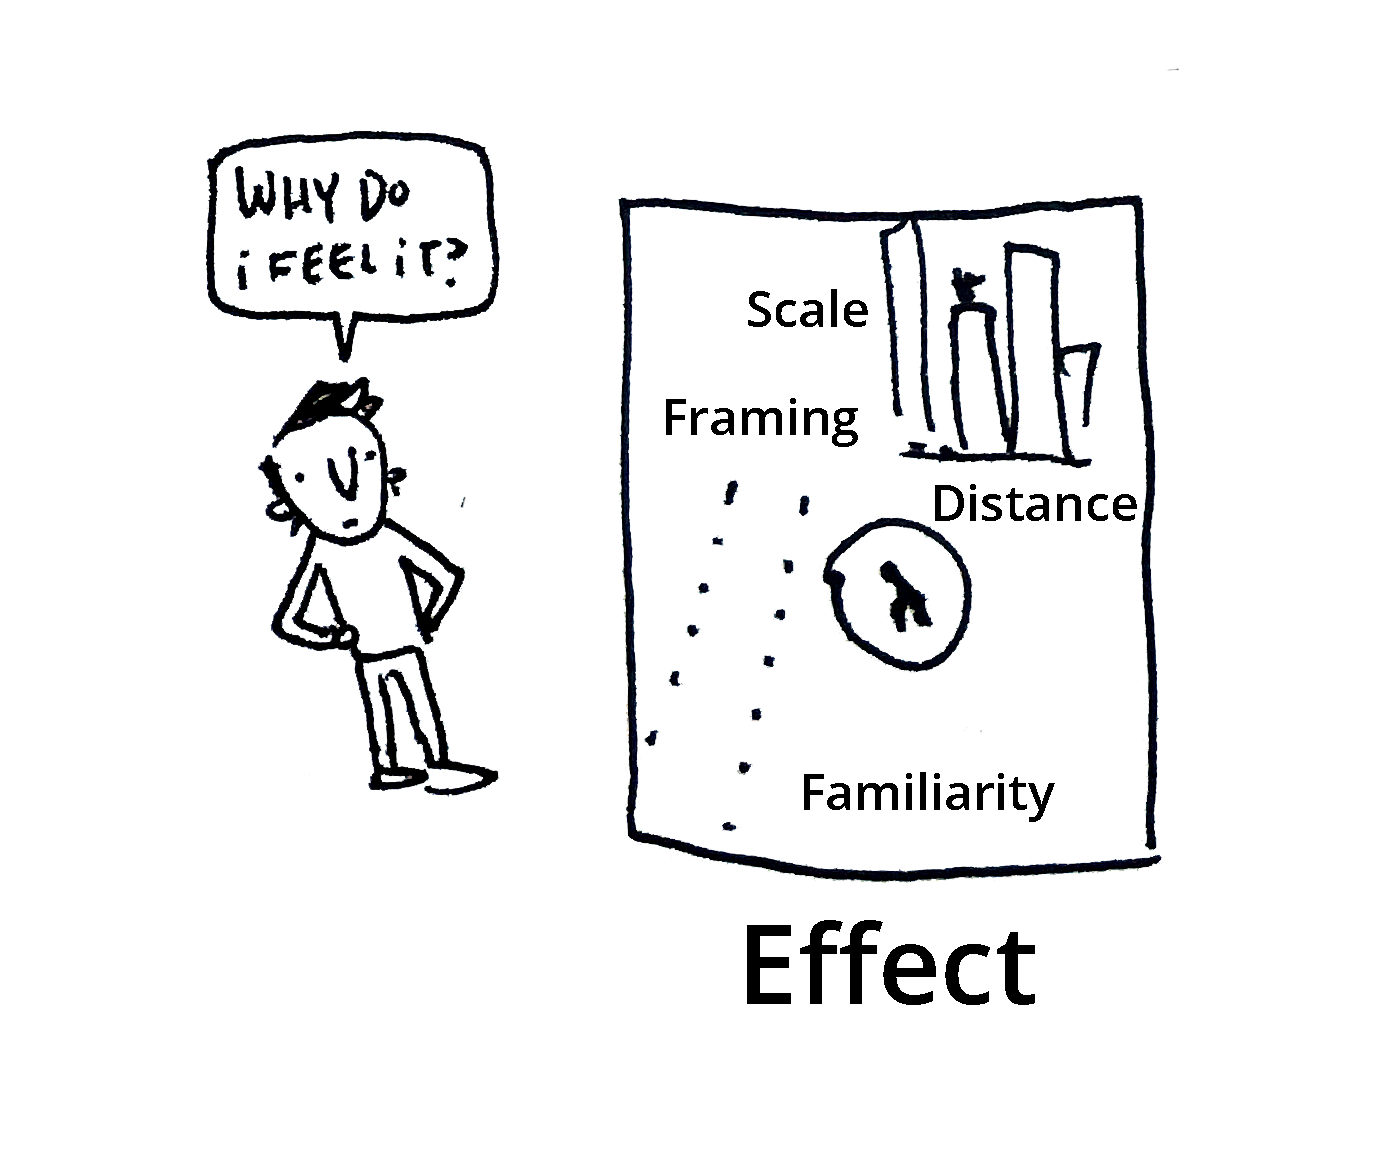 Effect: Examining visual techniques